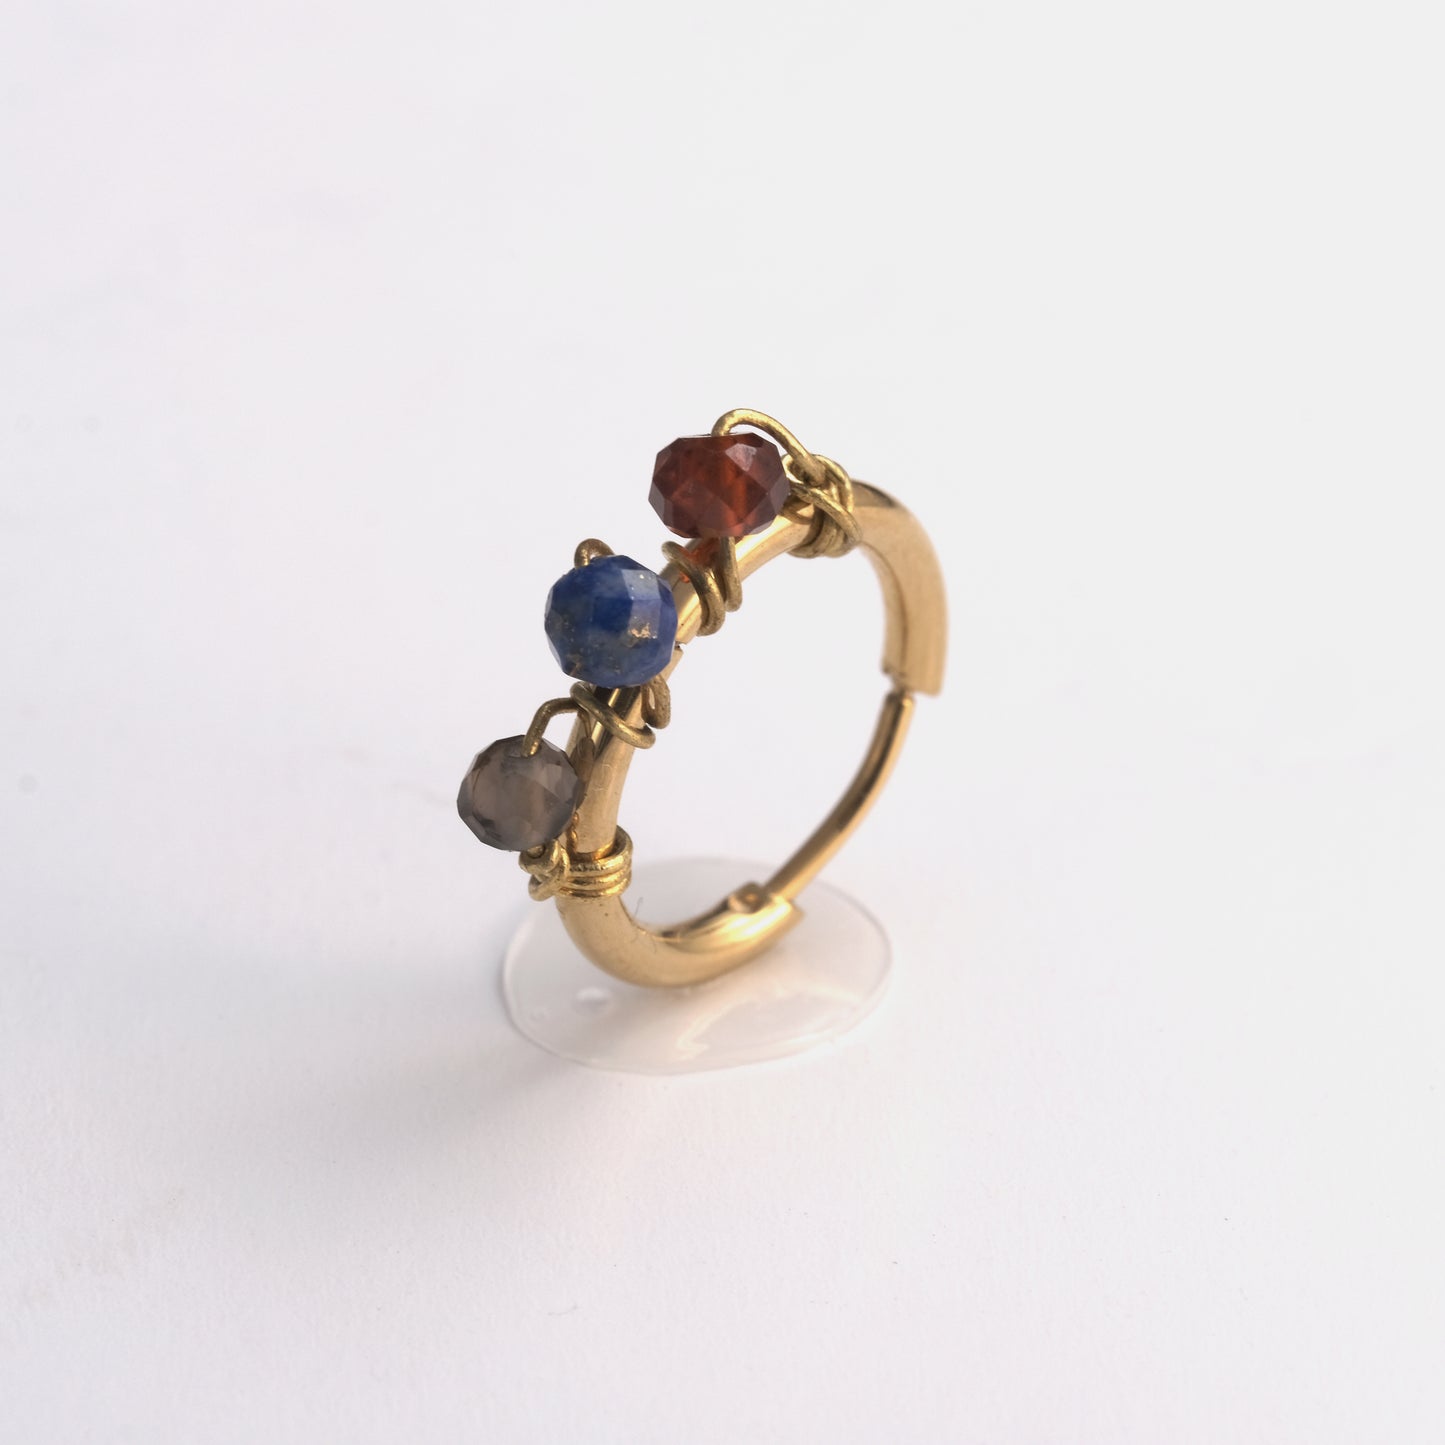 Individual jeweled earrings